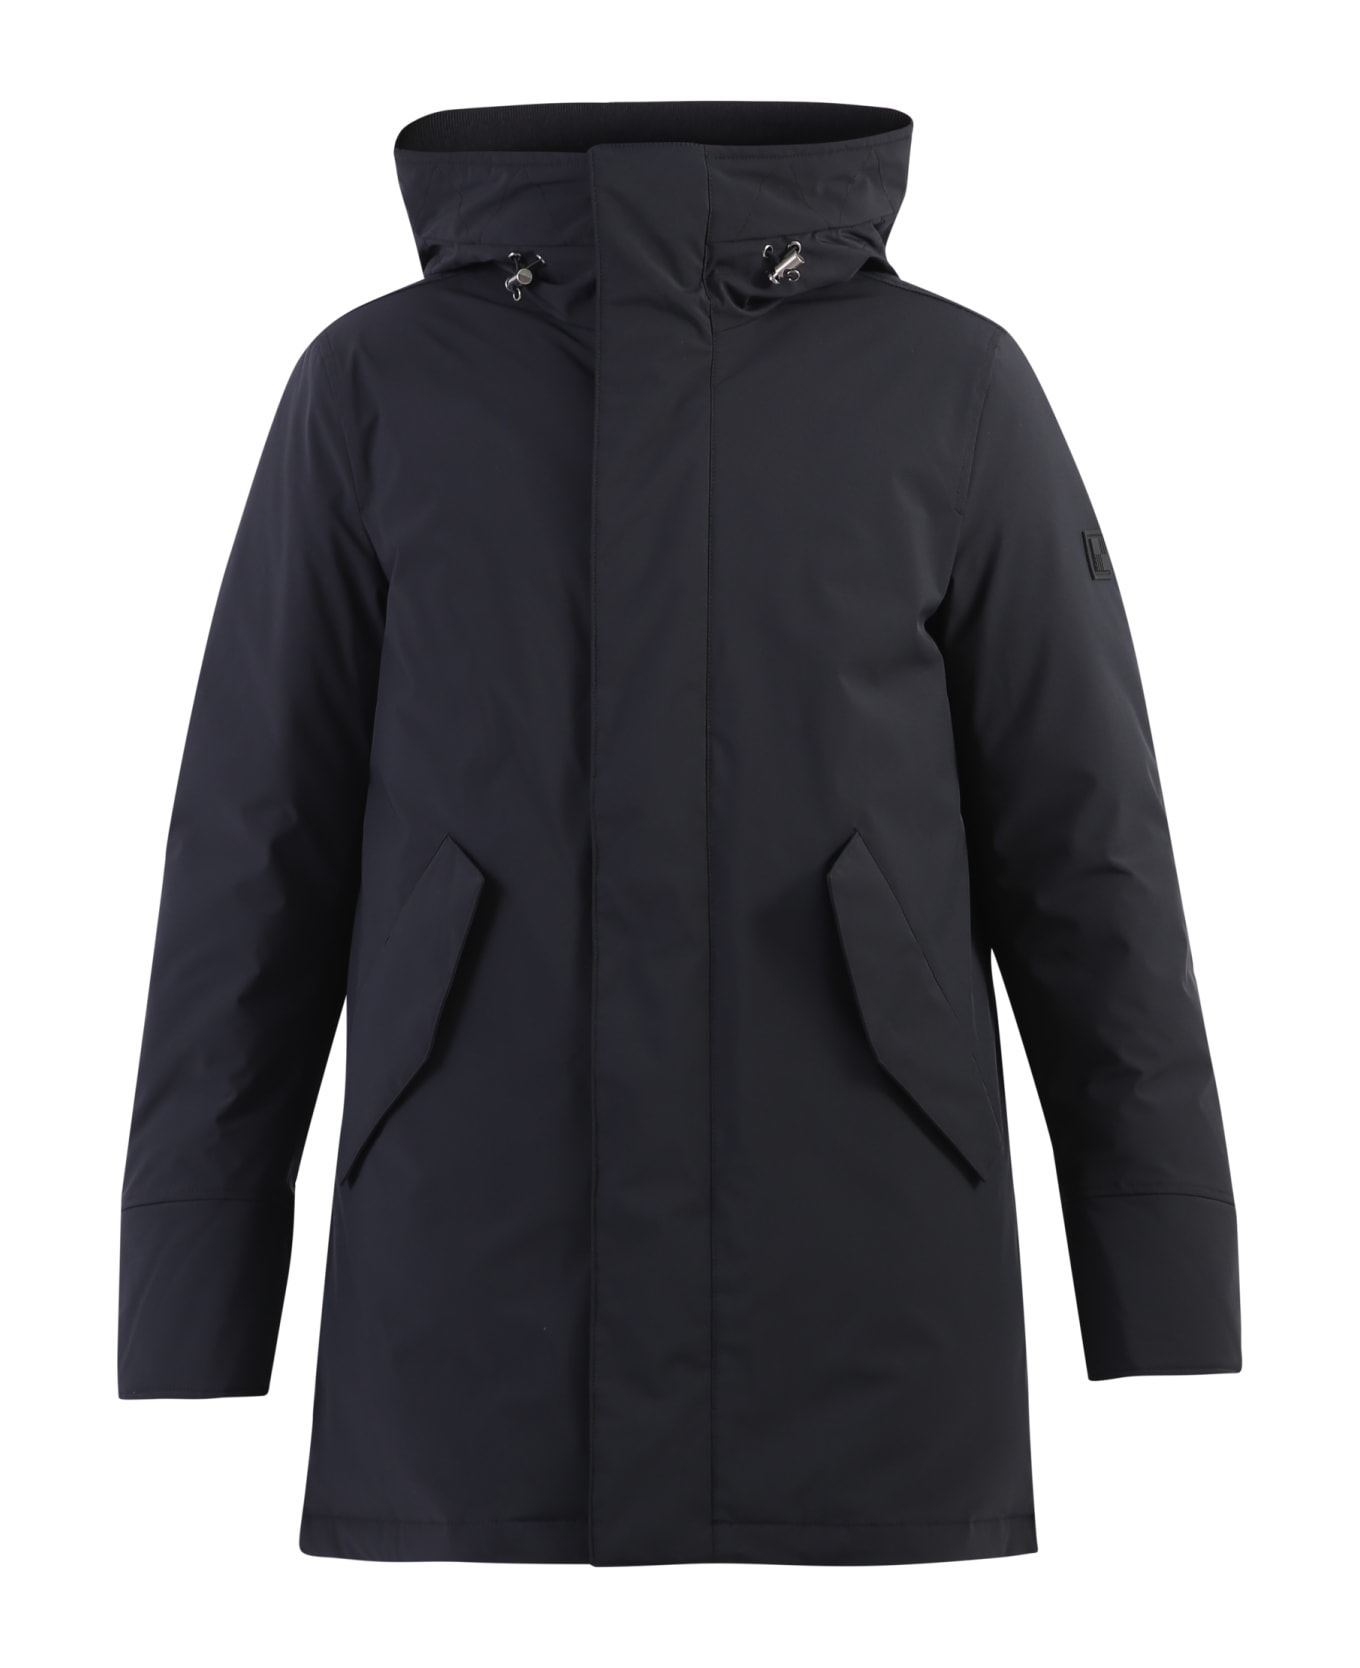 Woolrich Parka Coat - Black コート